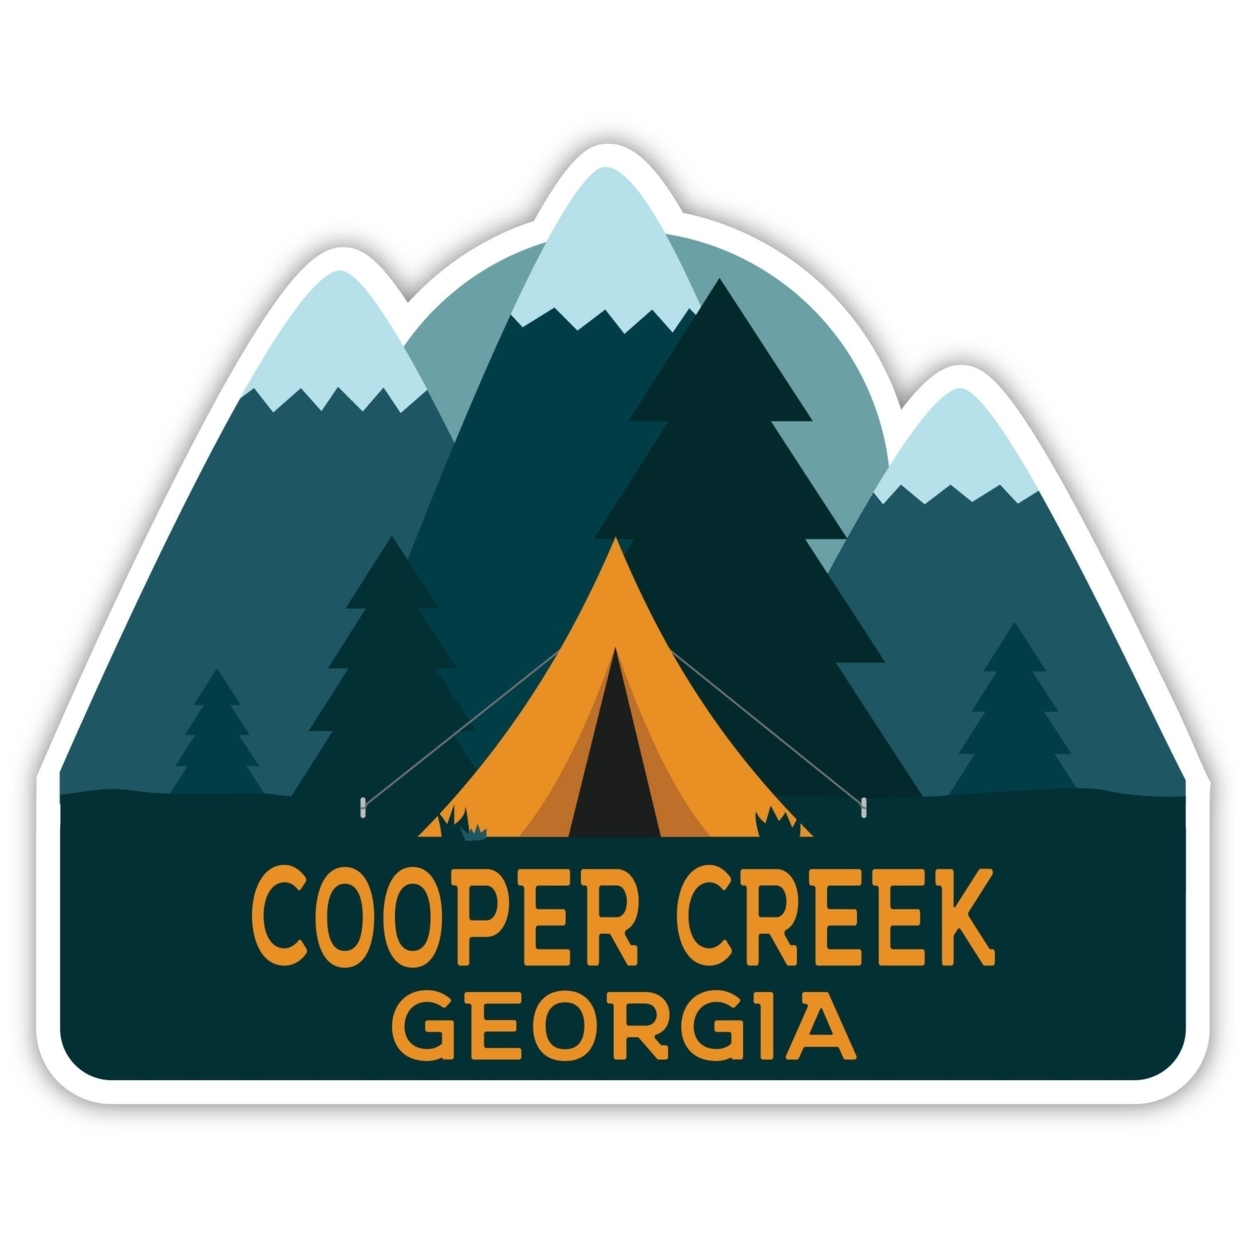 Cooper Creek Georgia Souvenir Decorative Stickers (Choose Theme And Size) - 4-Pack, 6-Inch, Tent